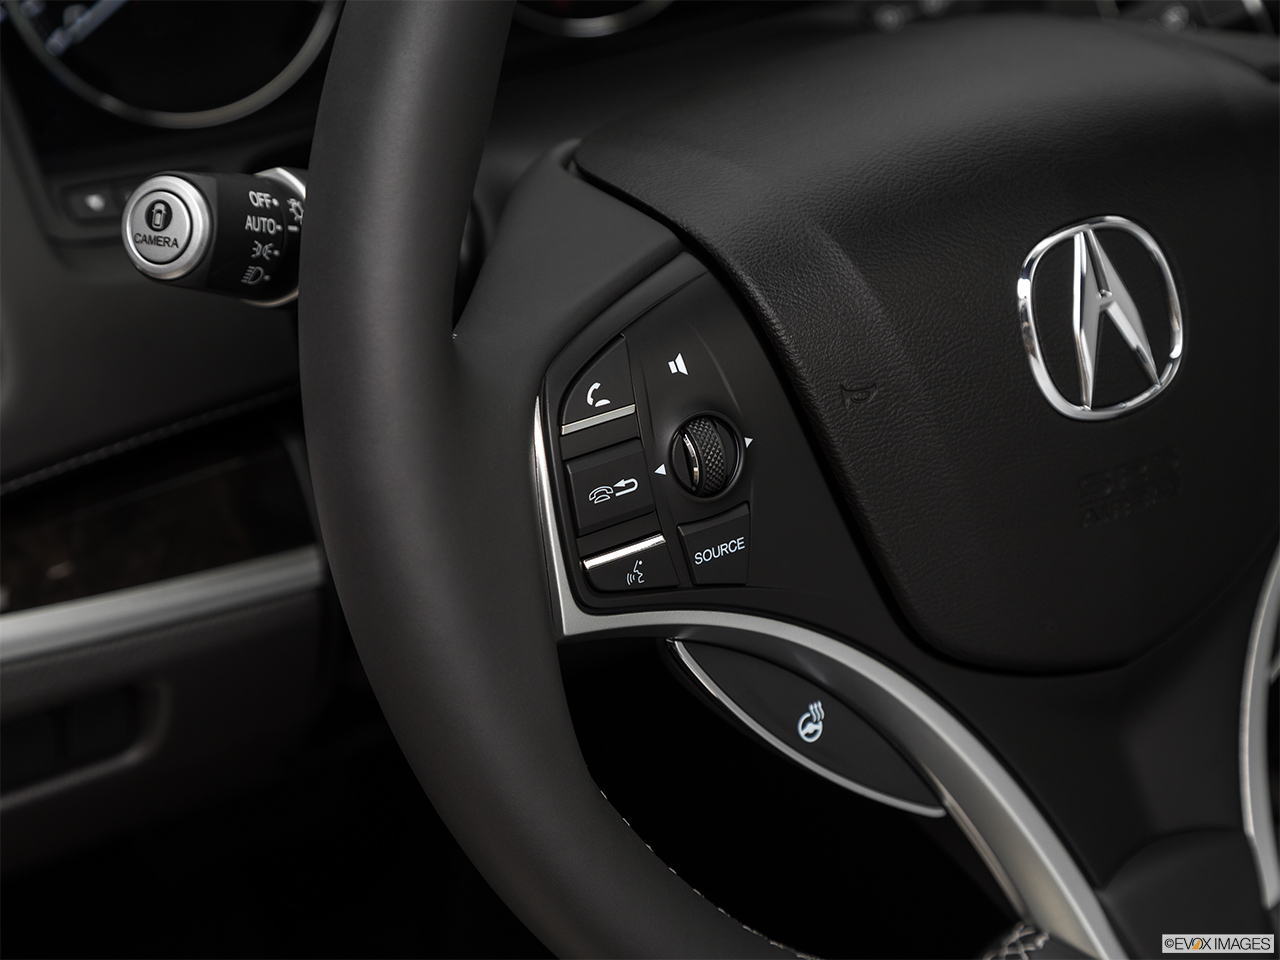 2020 Acura RLX Sport Hybrid SH-AWD Steering Wheel Controls (Left Side) 